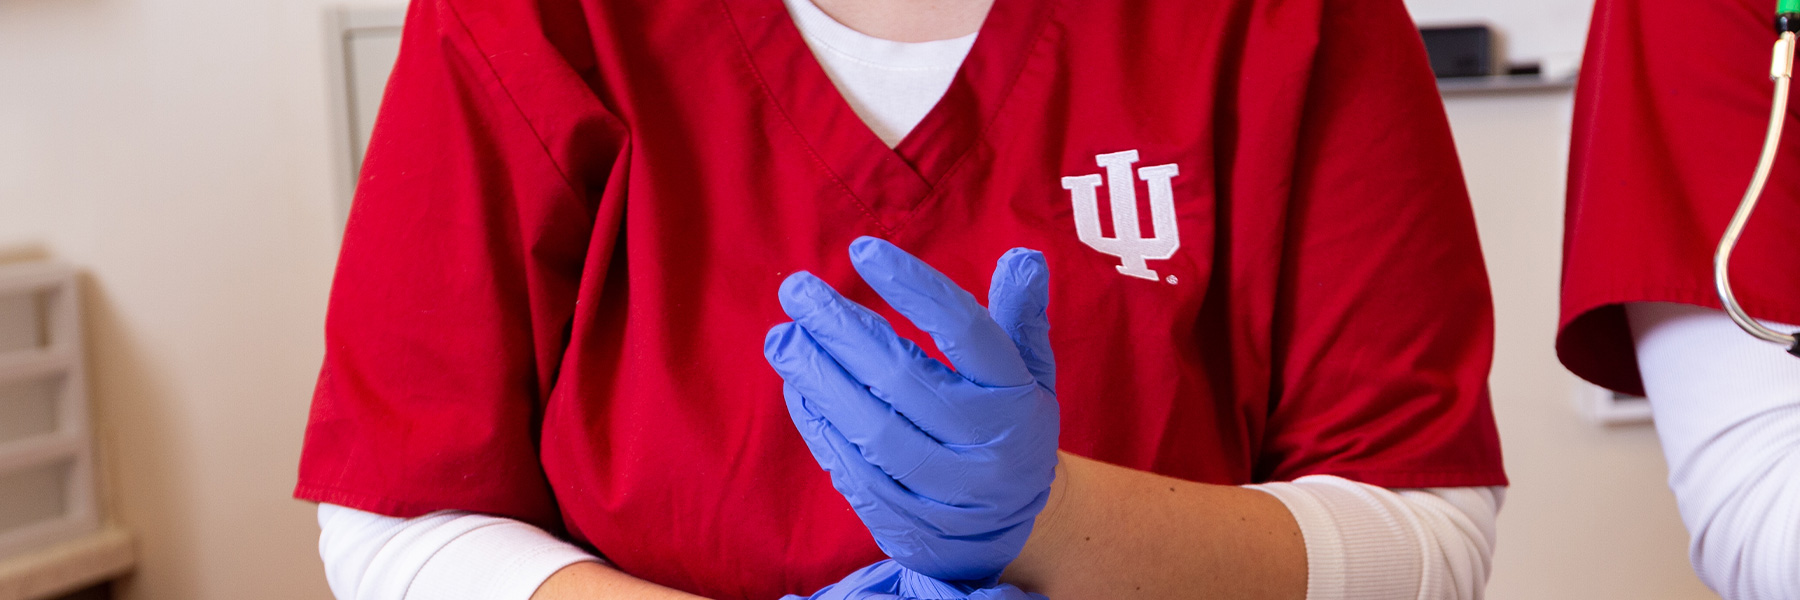 Nursing student putting on gloves